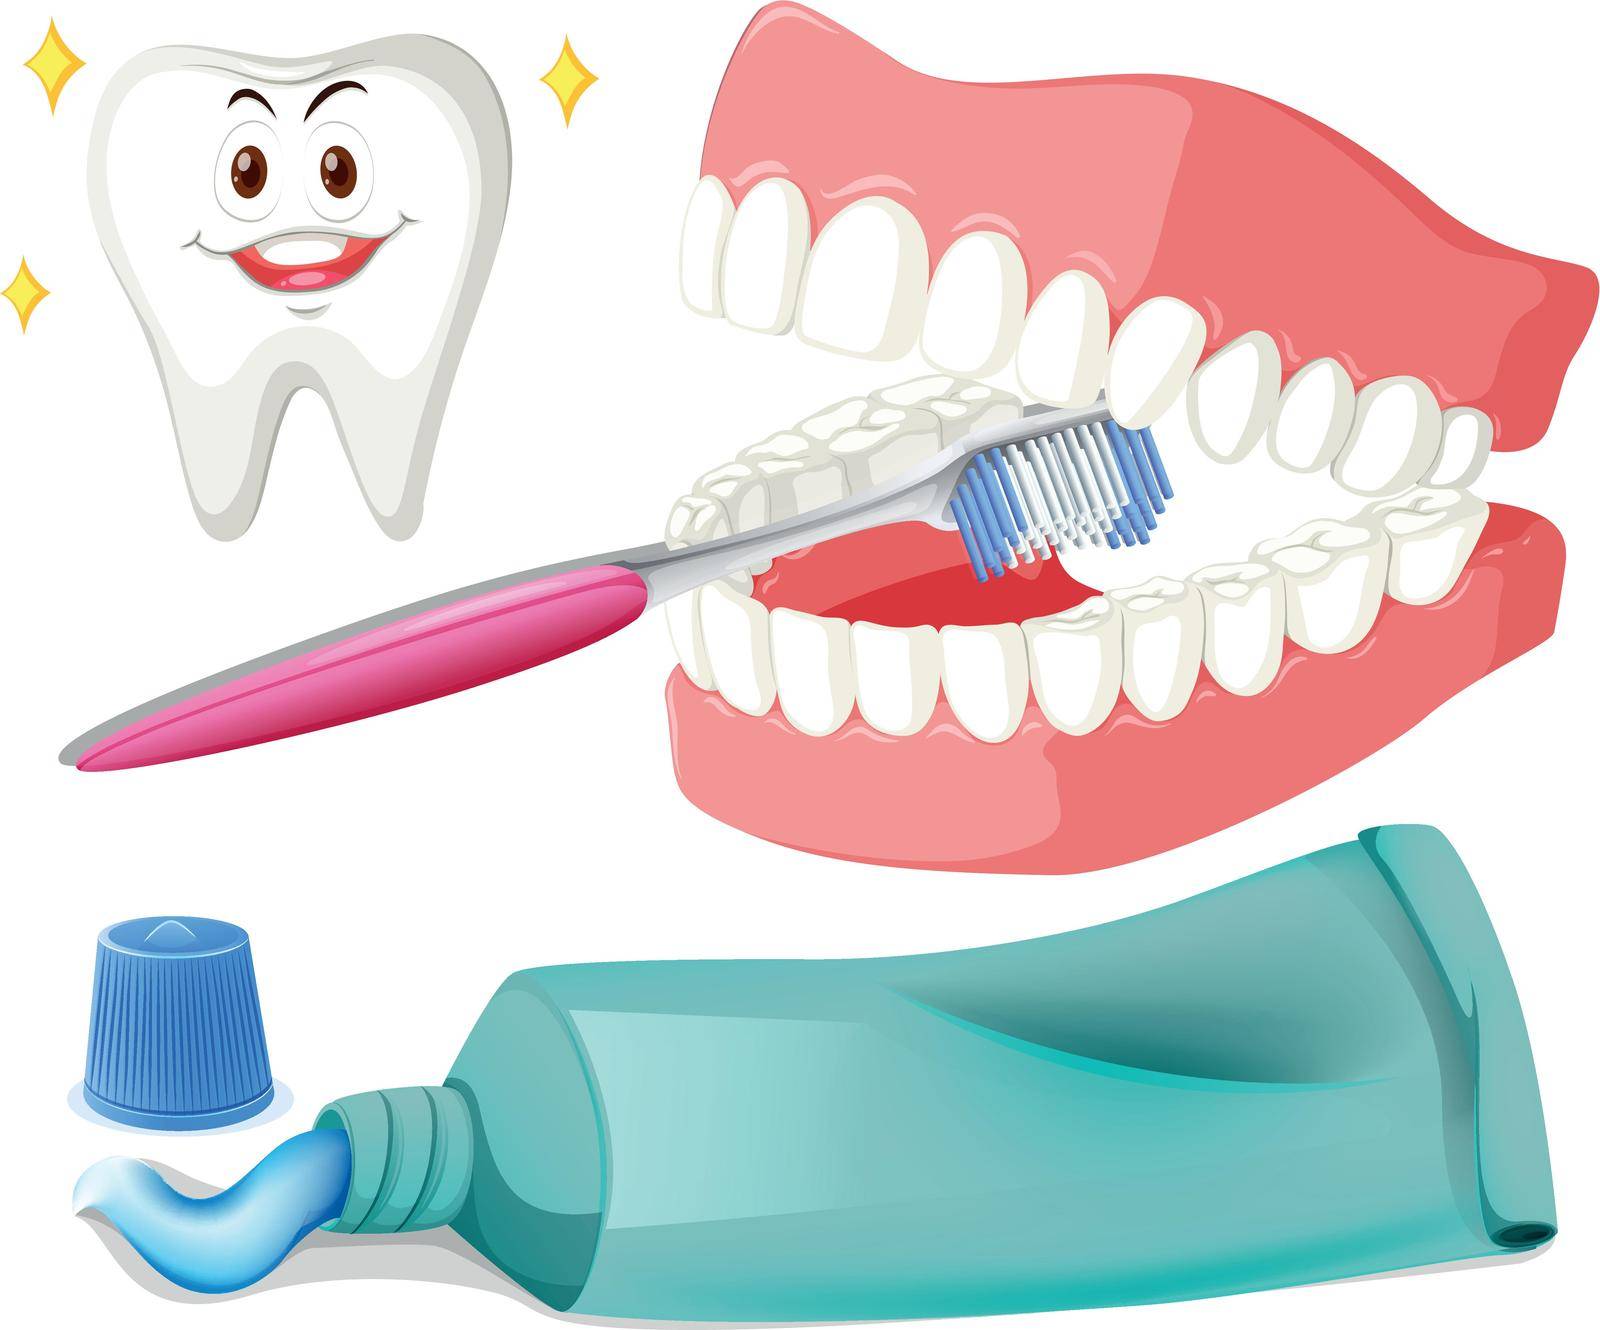 Brushing teeth with brush and paste illustration